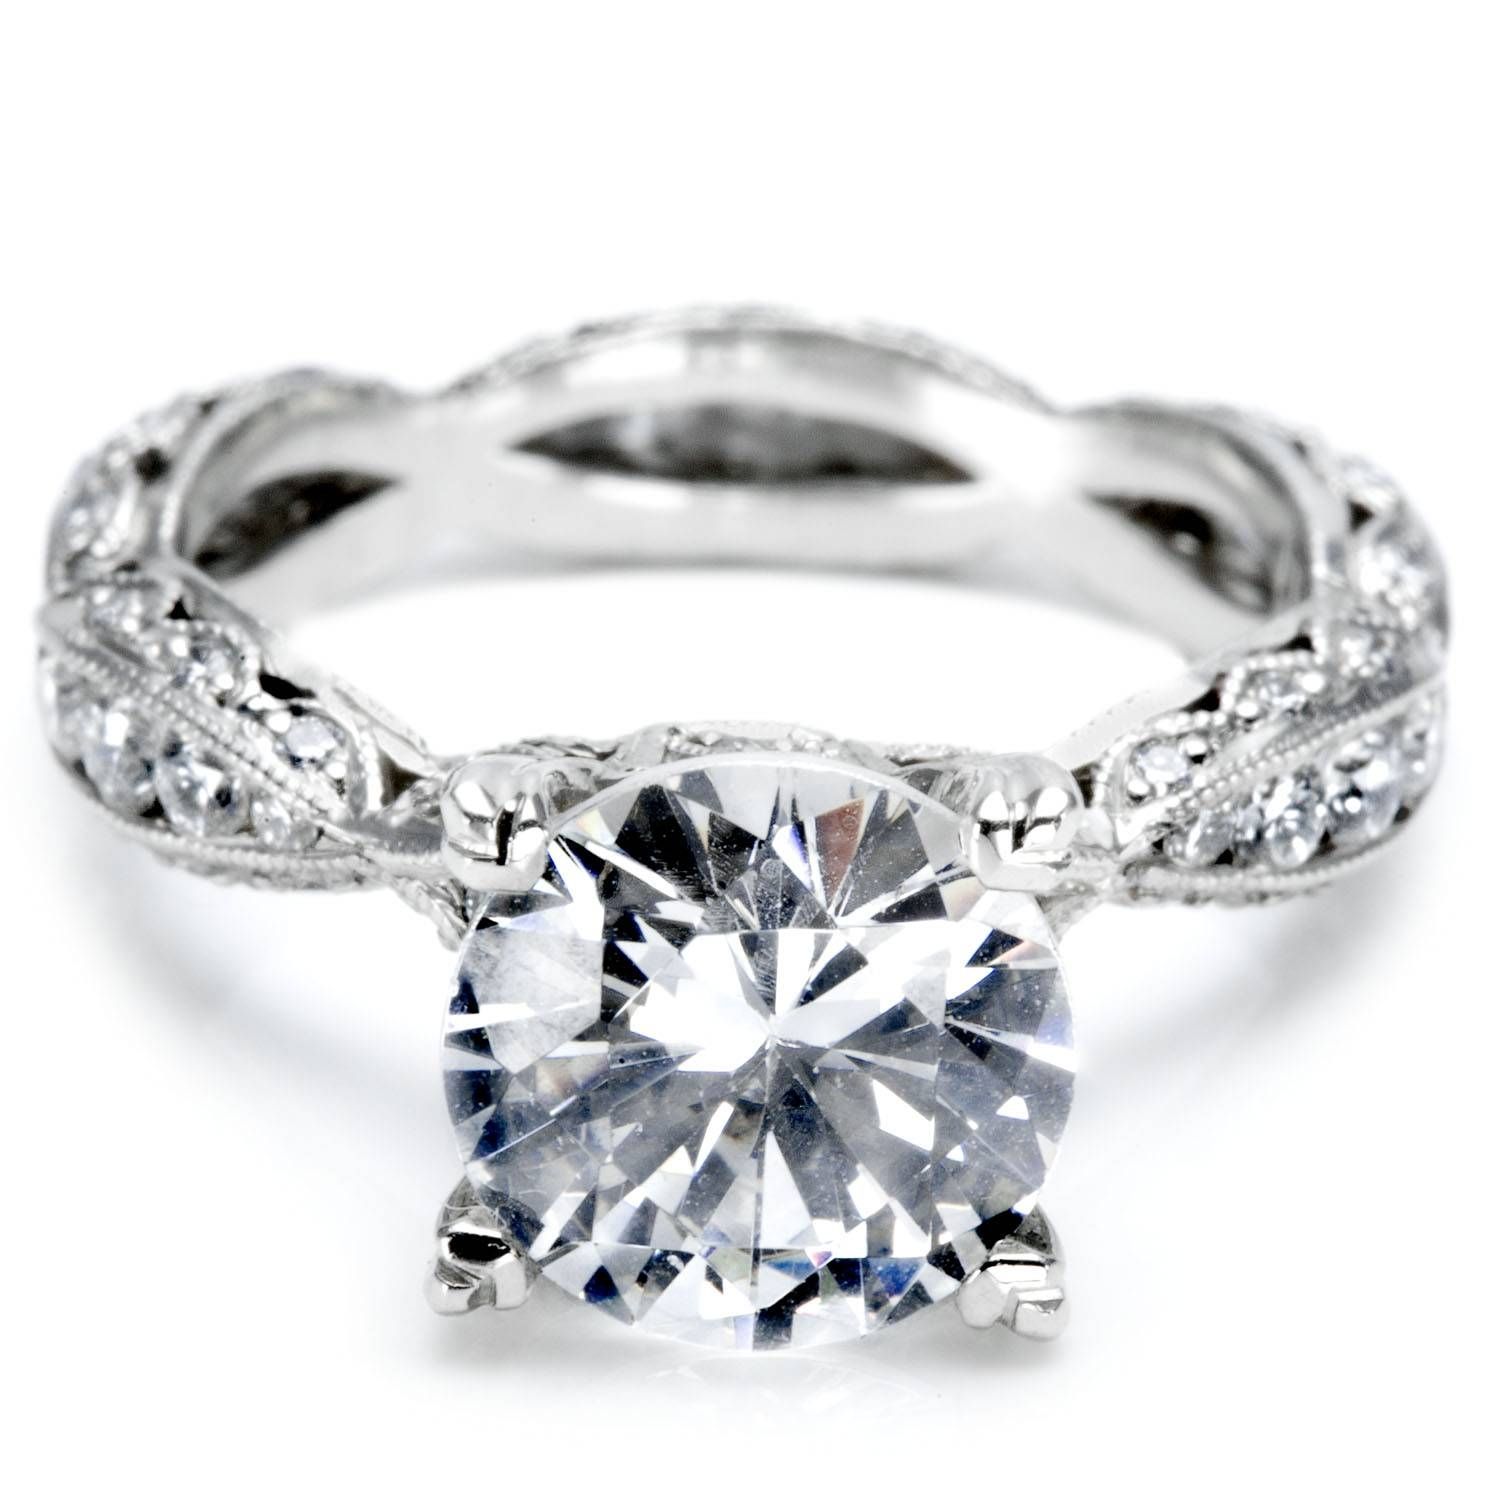 Stunning Design Weddings Rings For Her Wedding Rings For Her Cool For Wedding Bands For Her (View 15 of 15)